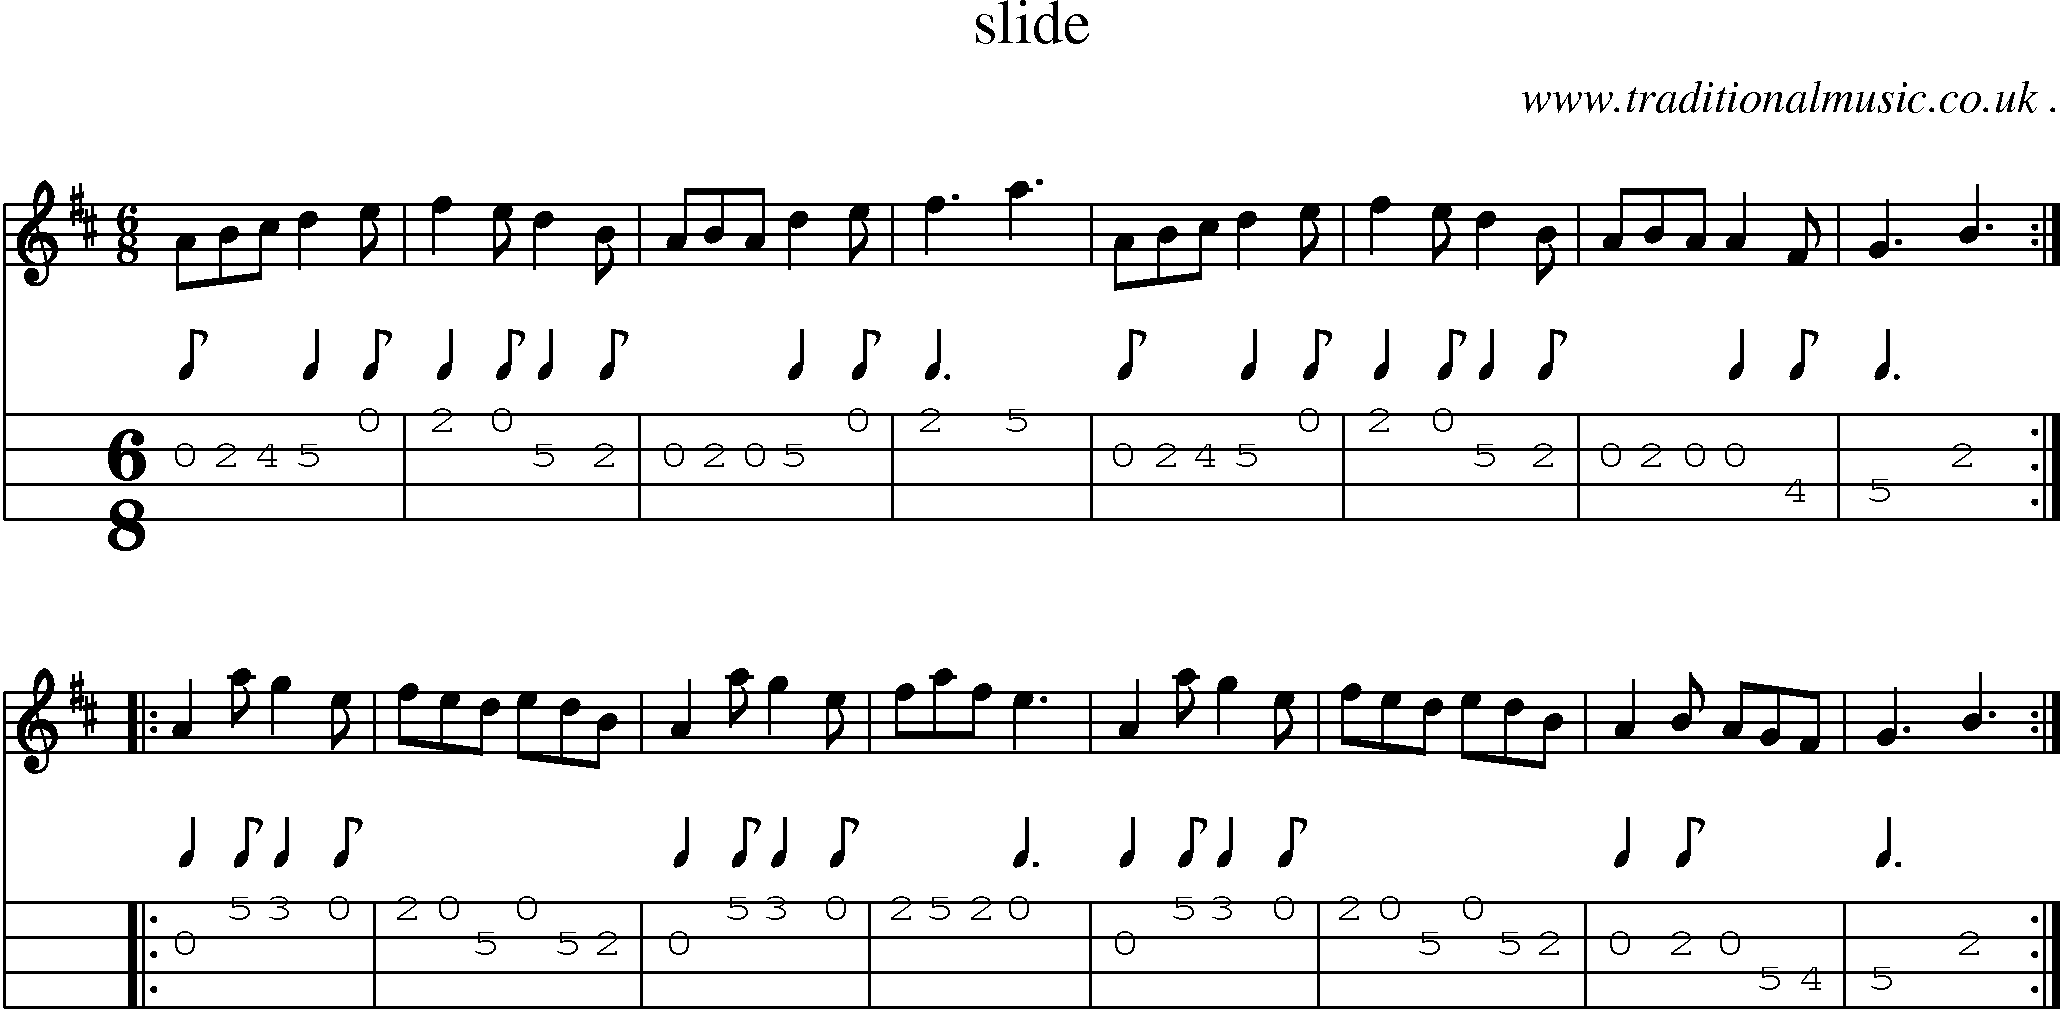 Sheet-Music and Mandolin Tabs for Slide